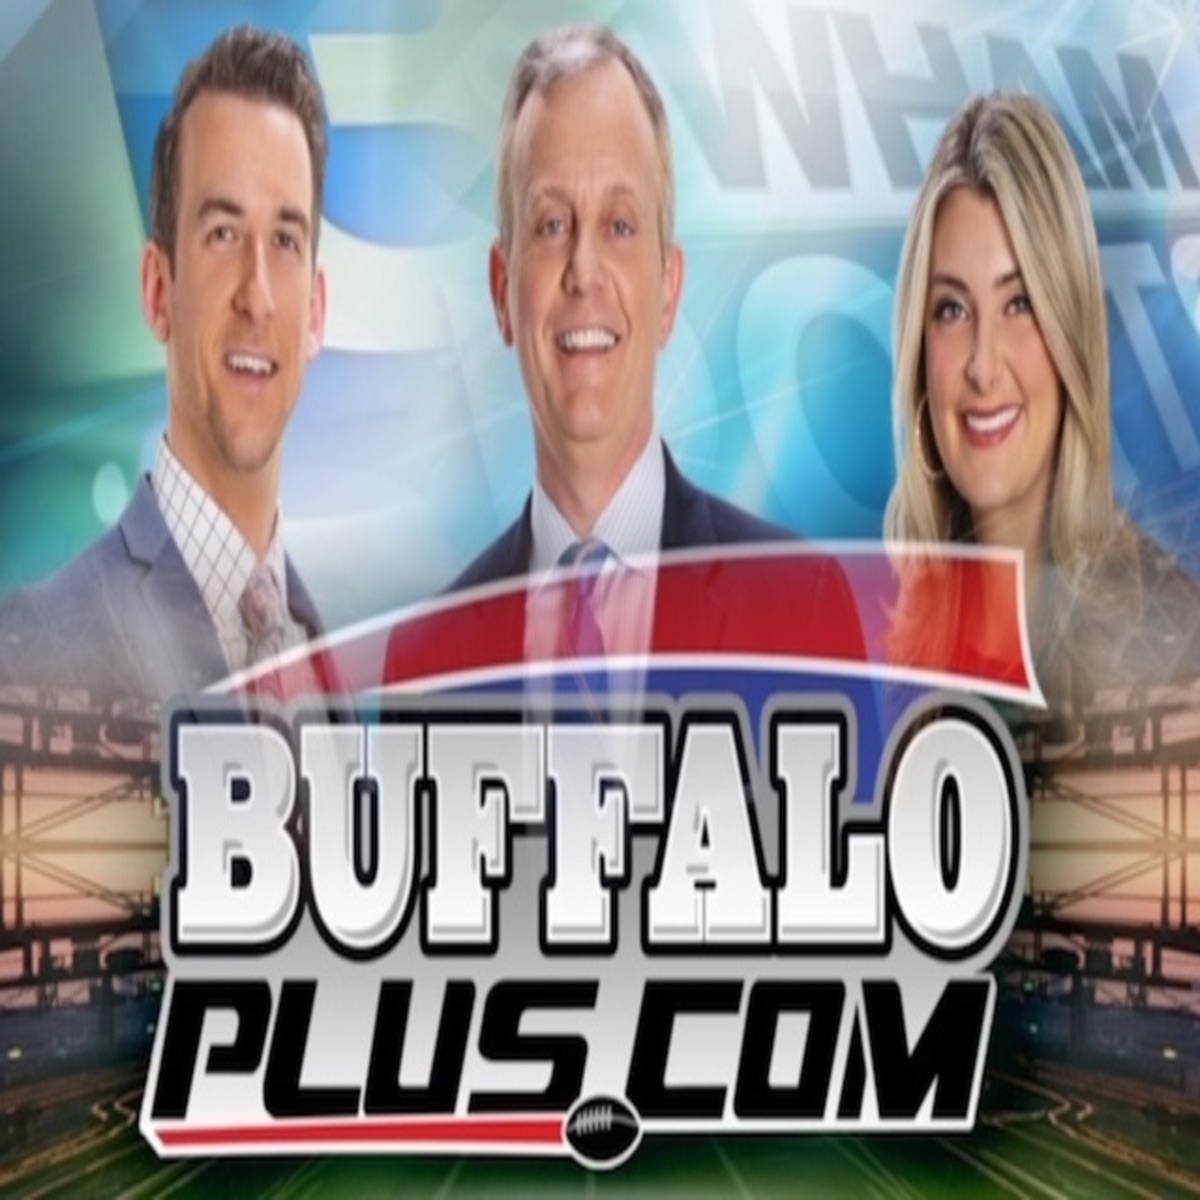 Gym billetpris Betjening mulig Buffalo Plus: A podcast about the Buffalo Bills – Podcast – Podtail